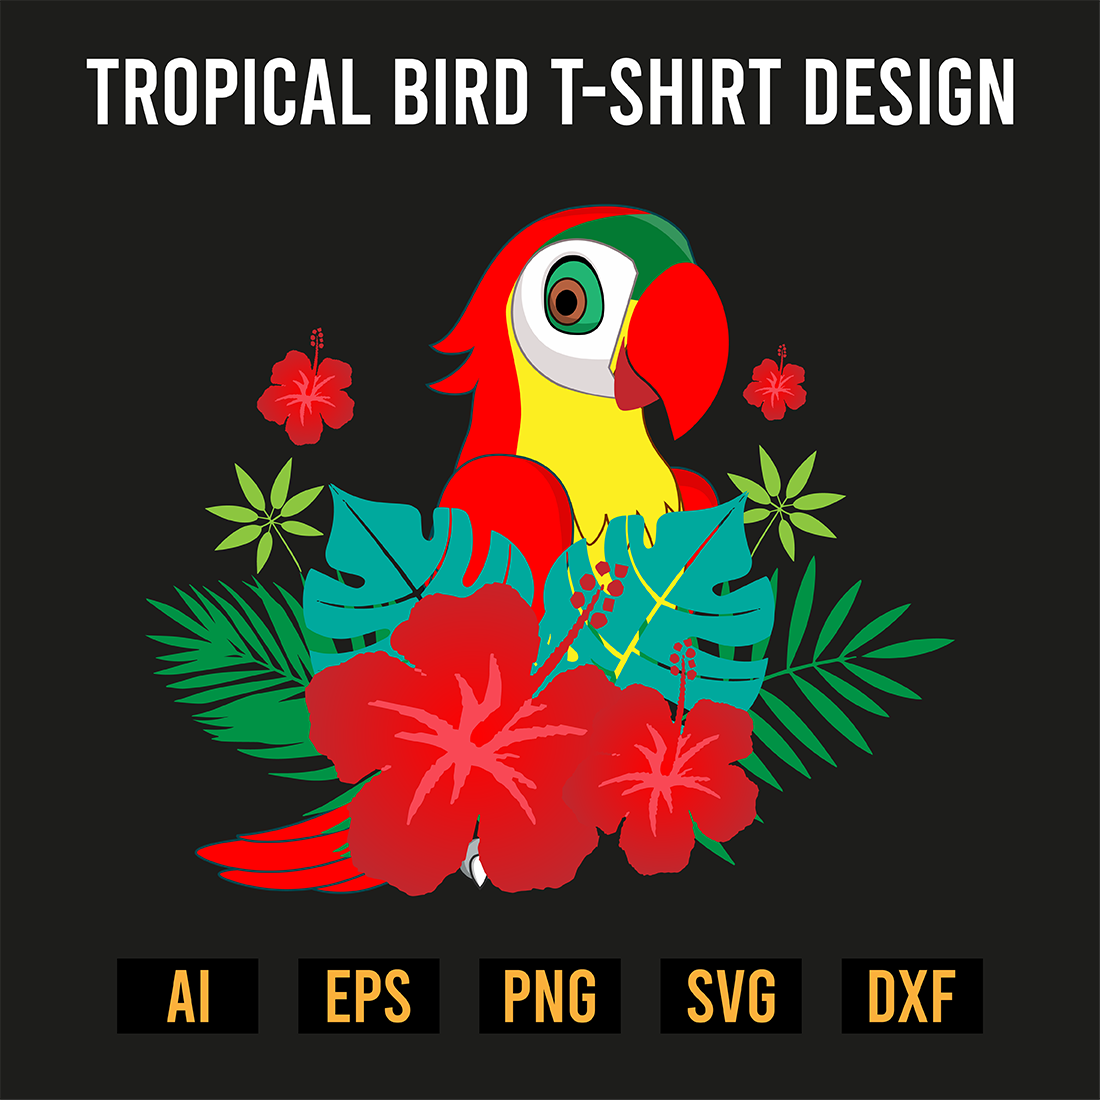 Tropical Bird T-shirt Design preview image.